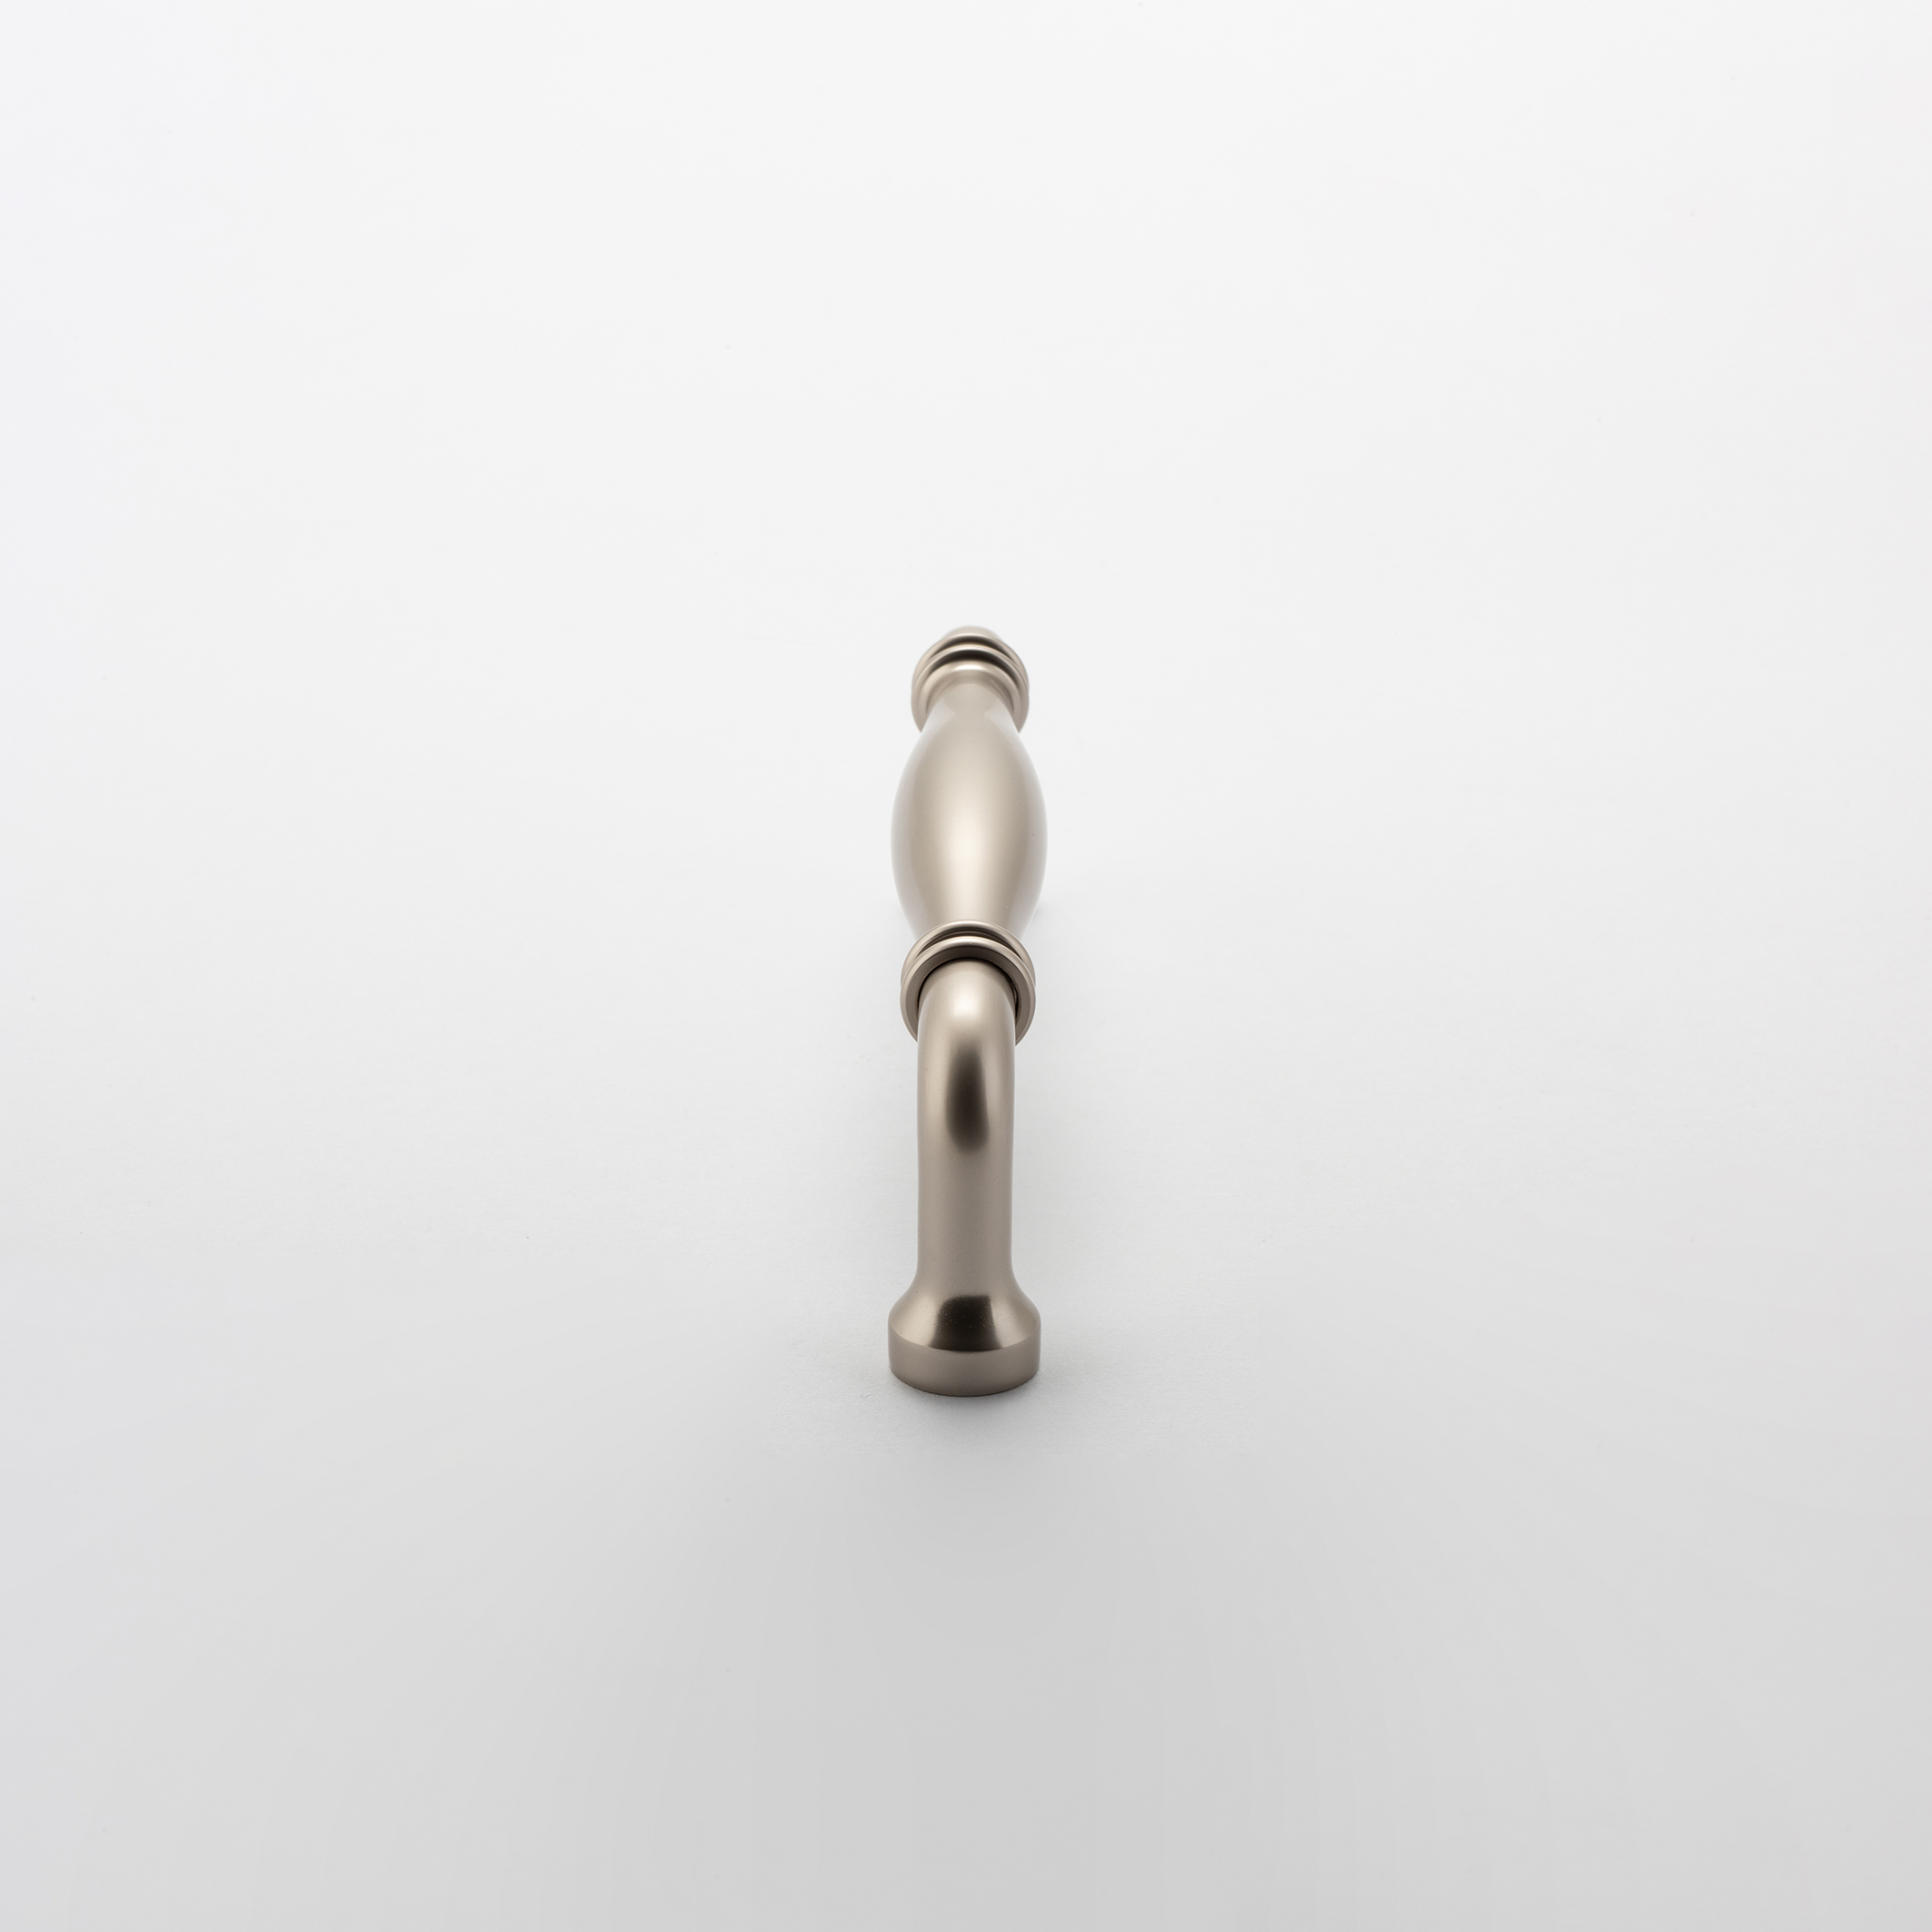 21089 - Sarlat Cabinet Pull - CTC256mm - Satin Nickel